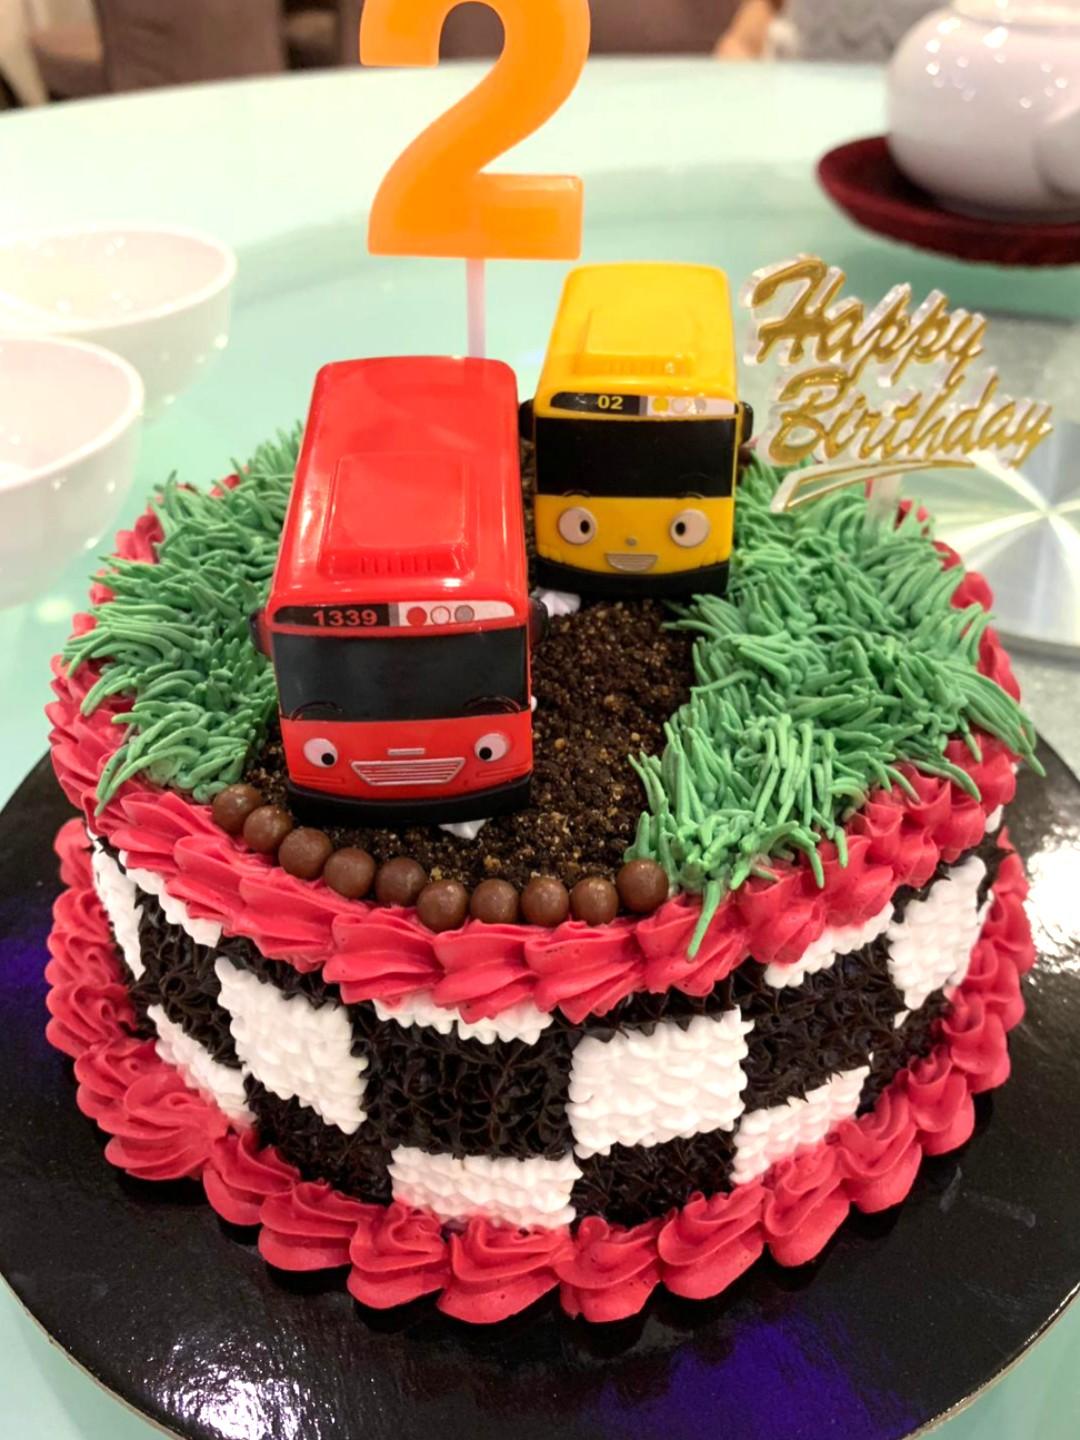 Pariser's Bakery - A school bus cake for my nephew! Happy birthday Avi! |  Facebook